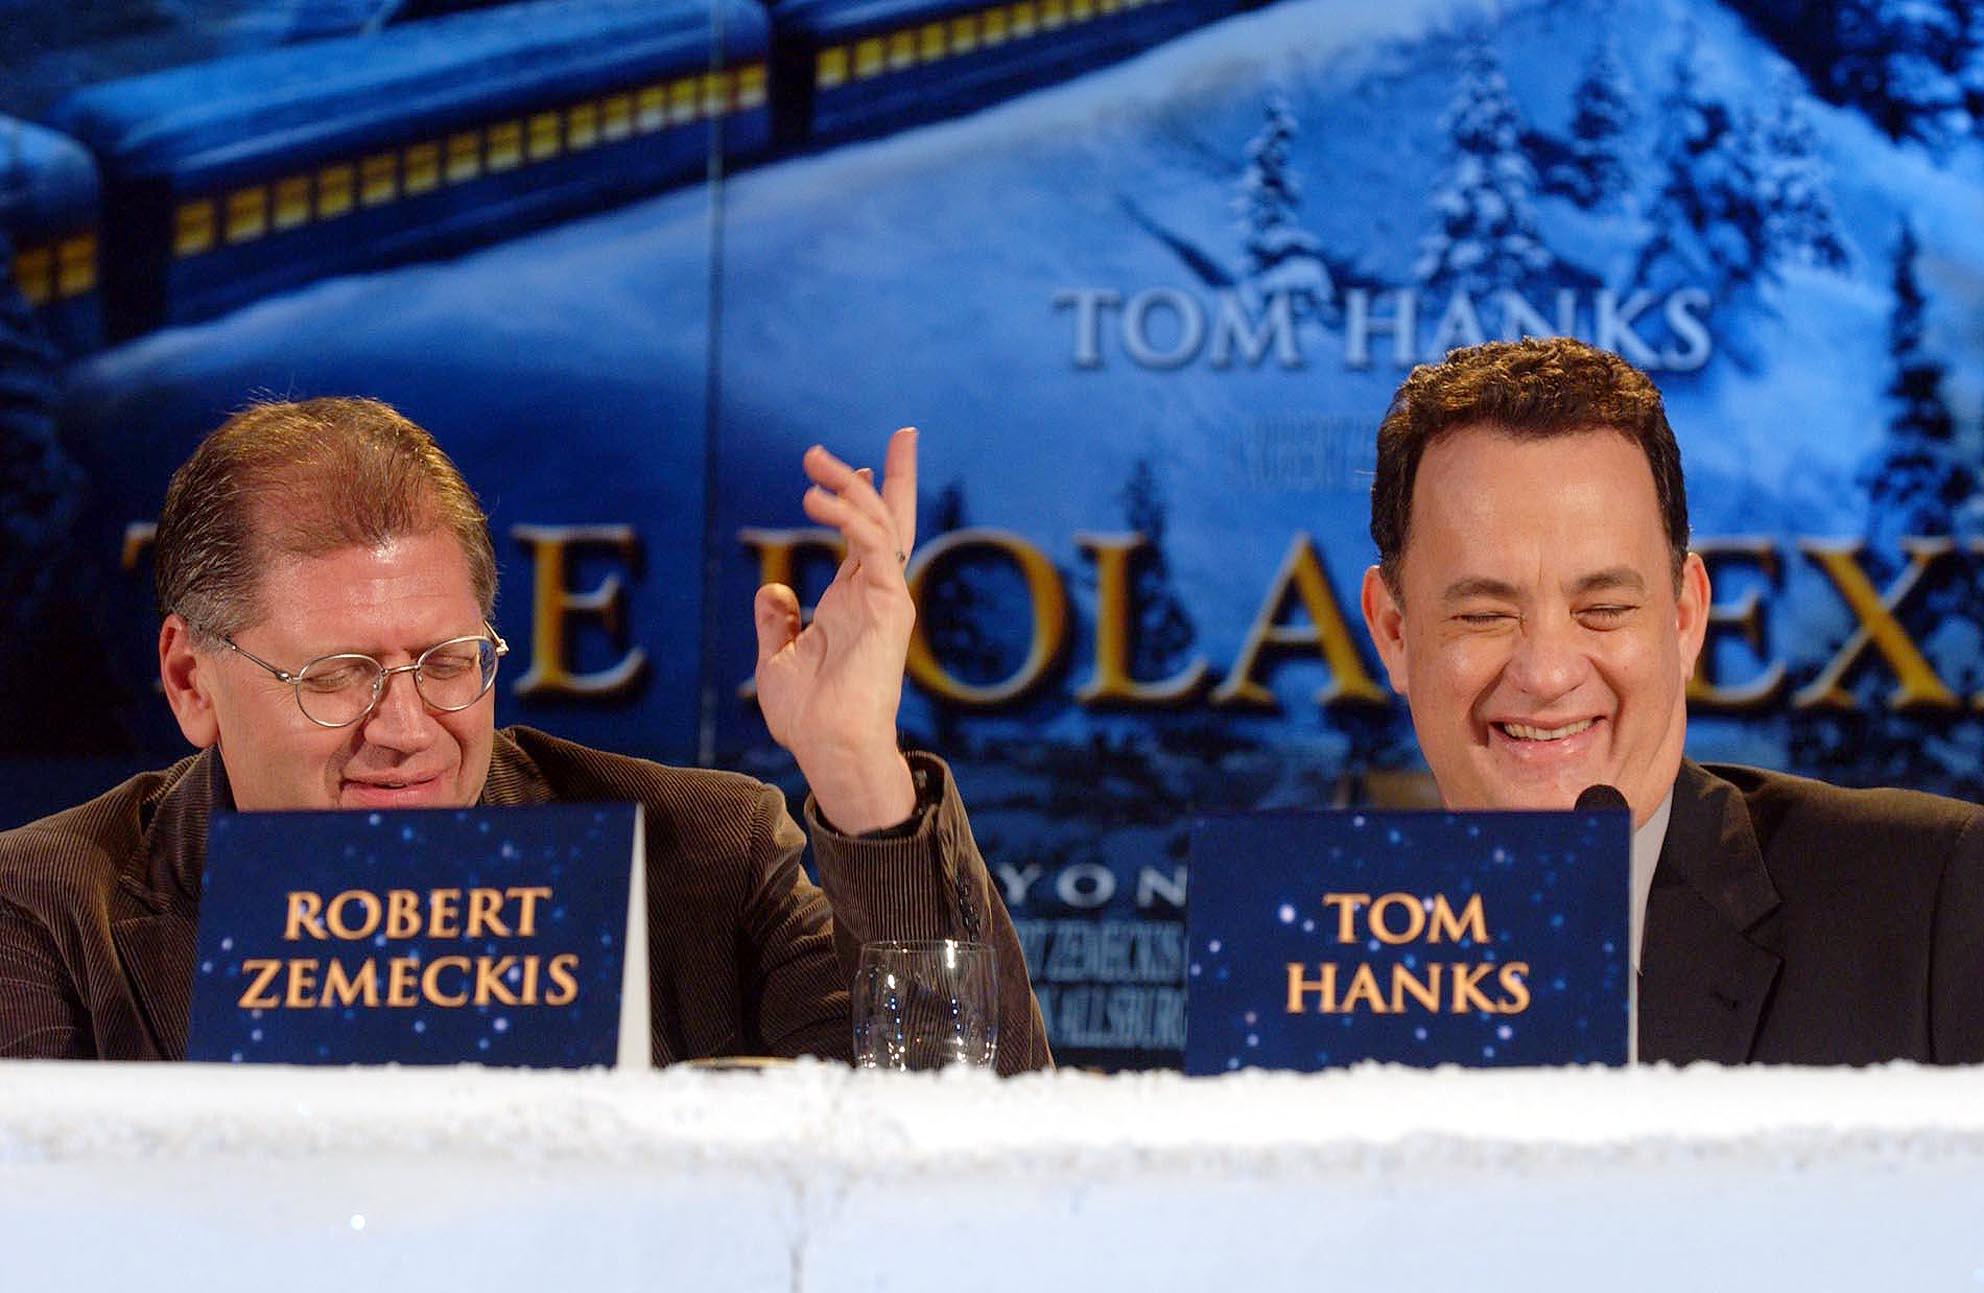 Tom Hanks and Robert Zemeckis at the Polar Express press conference